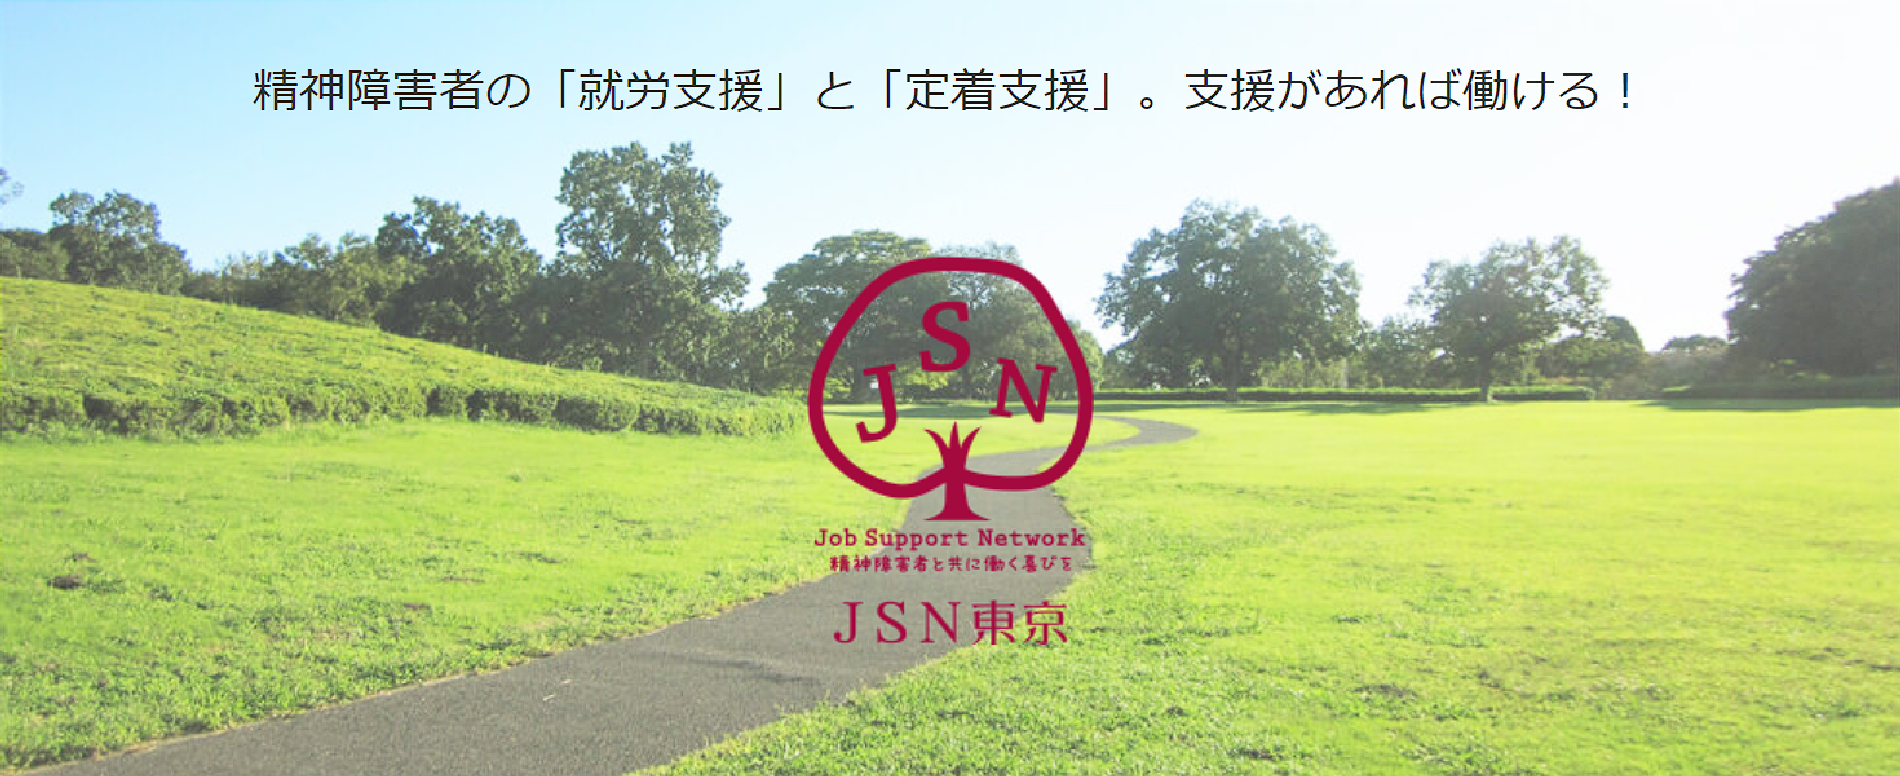 JSN東京_トップ画像